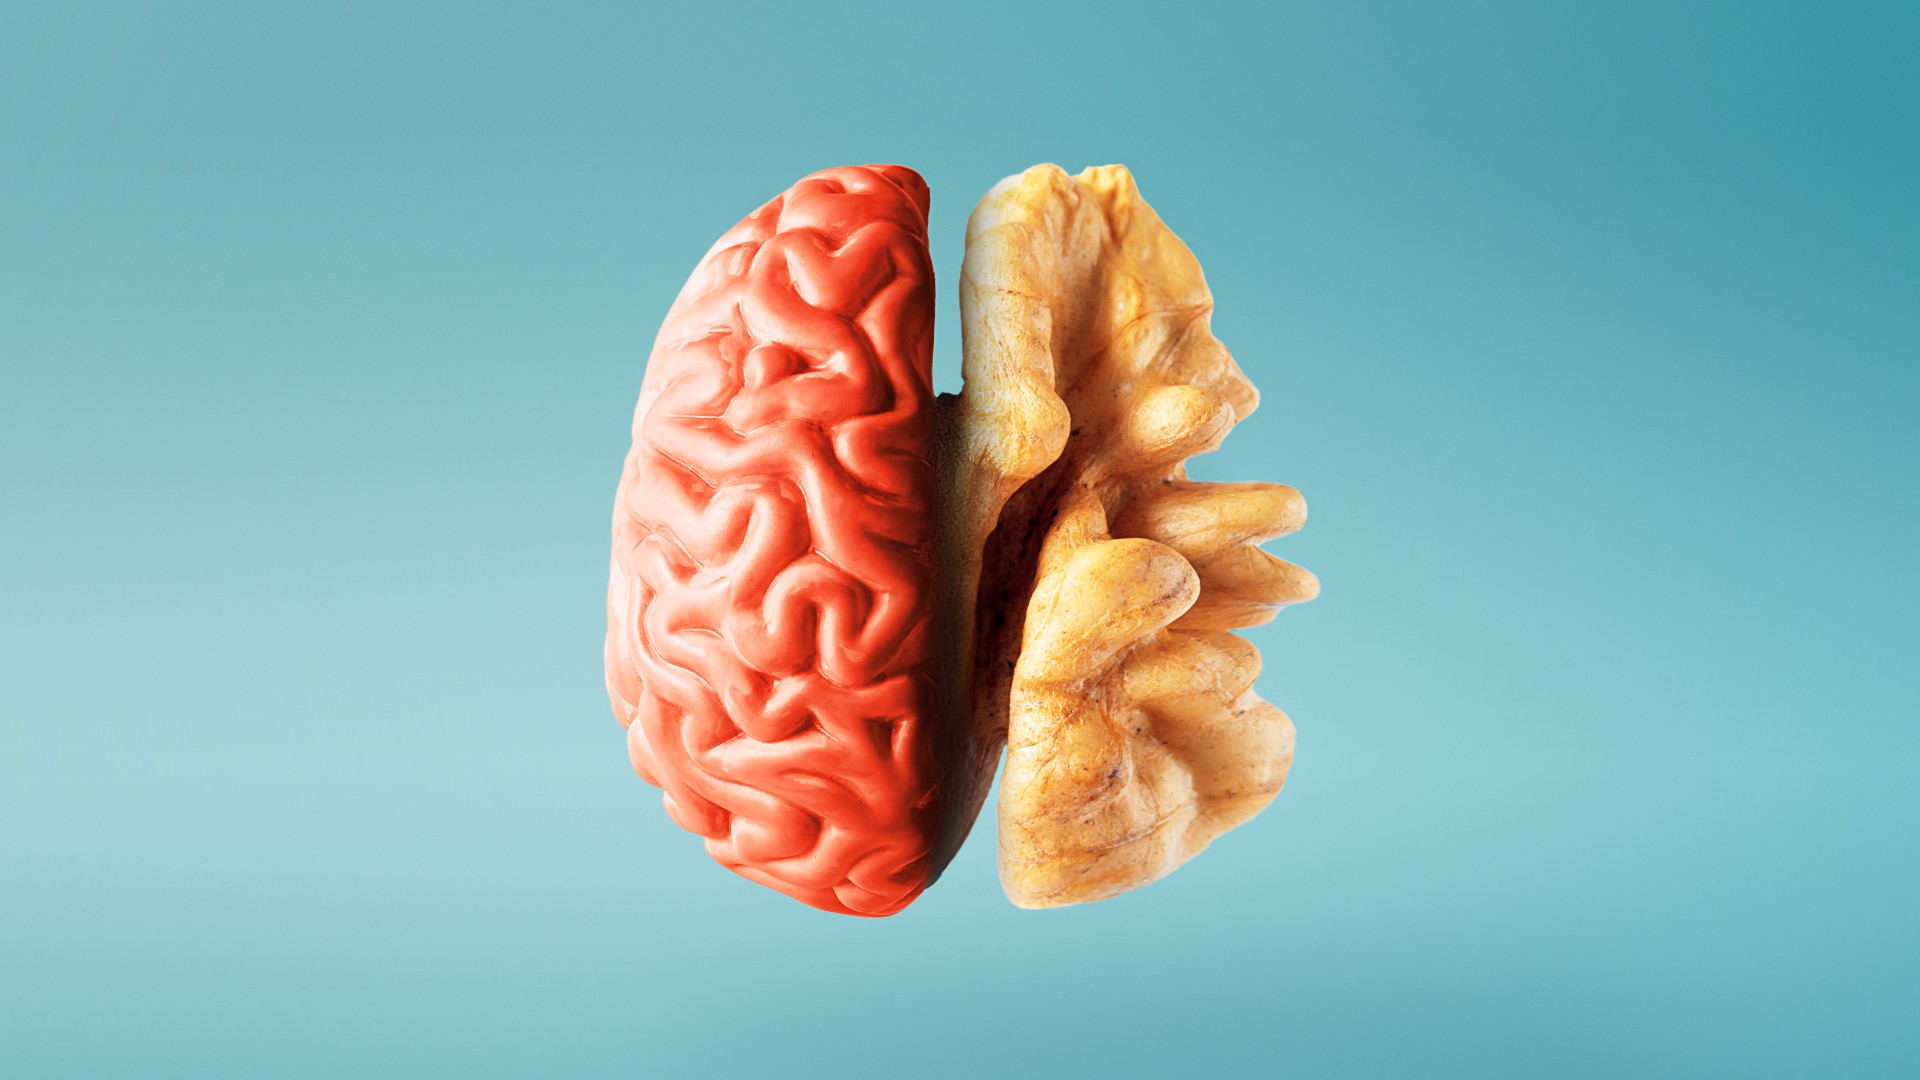 Brain and walnut on blue background